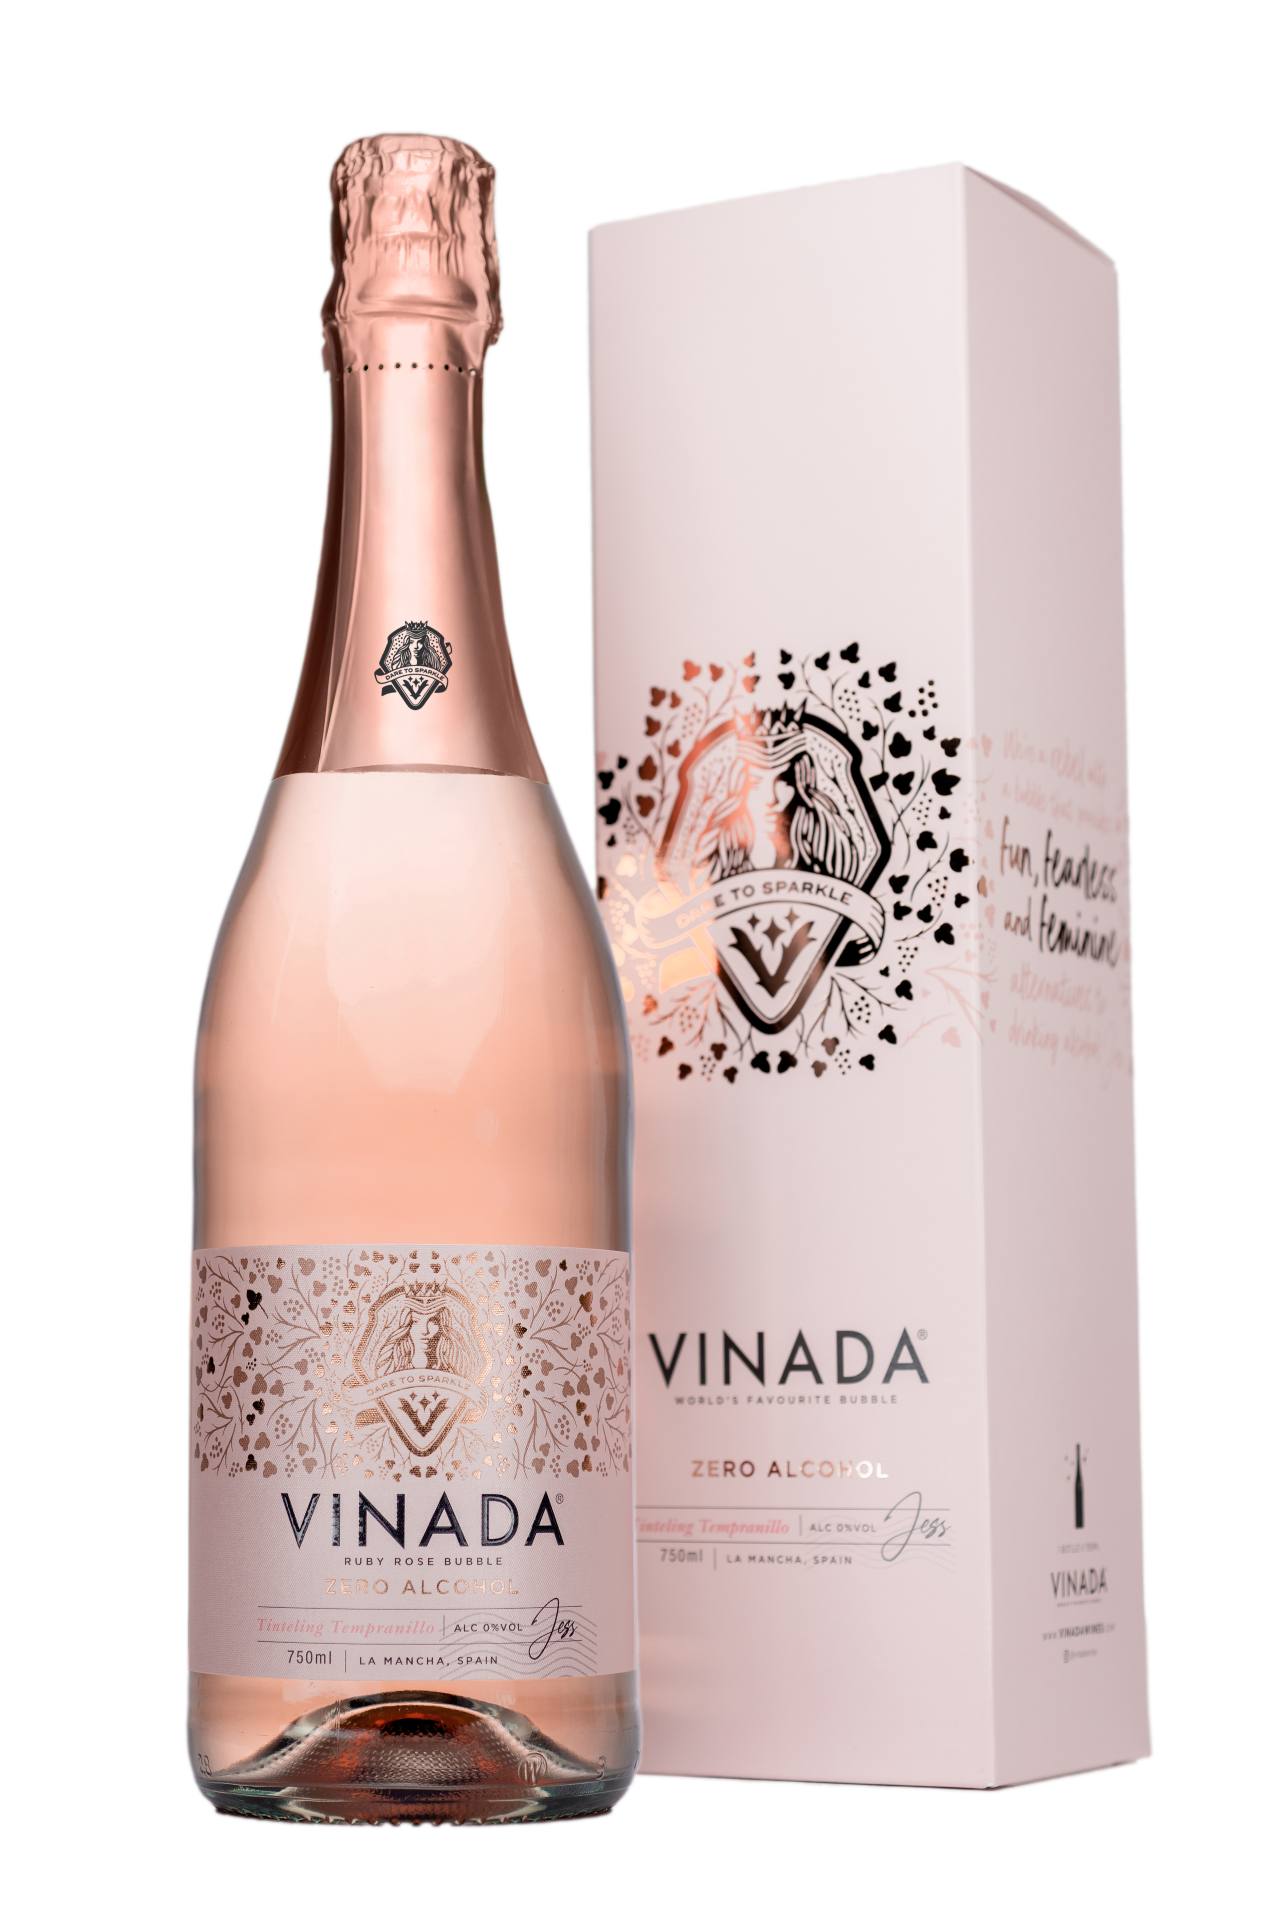 Vinada Tinteling Tempranillo Rose Gift packaging 750ml bottle